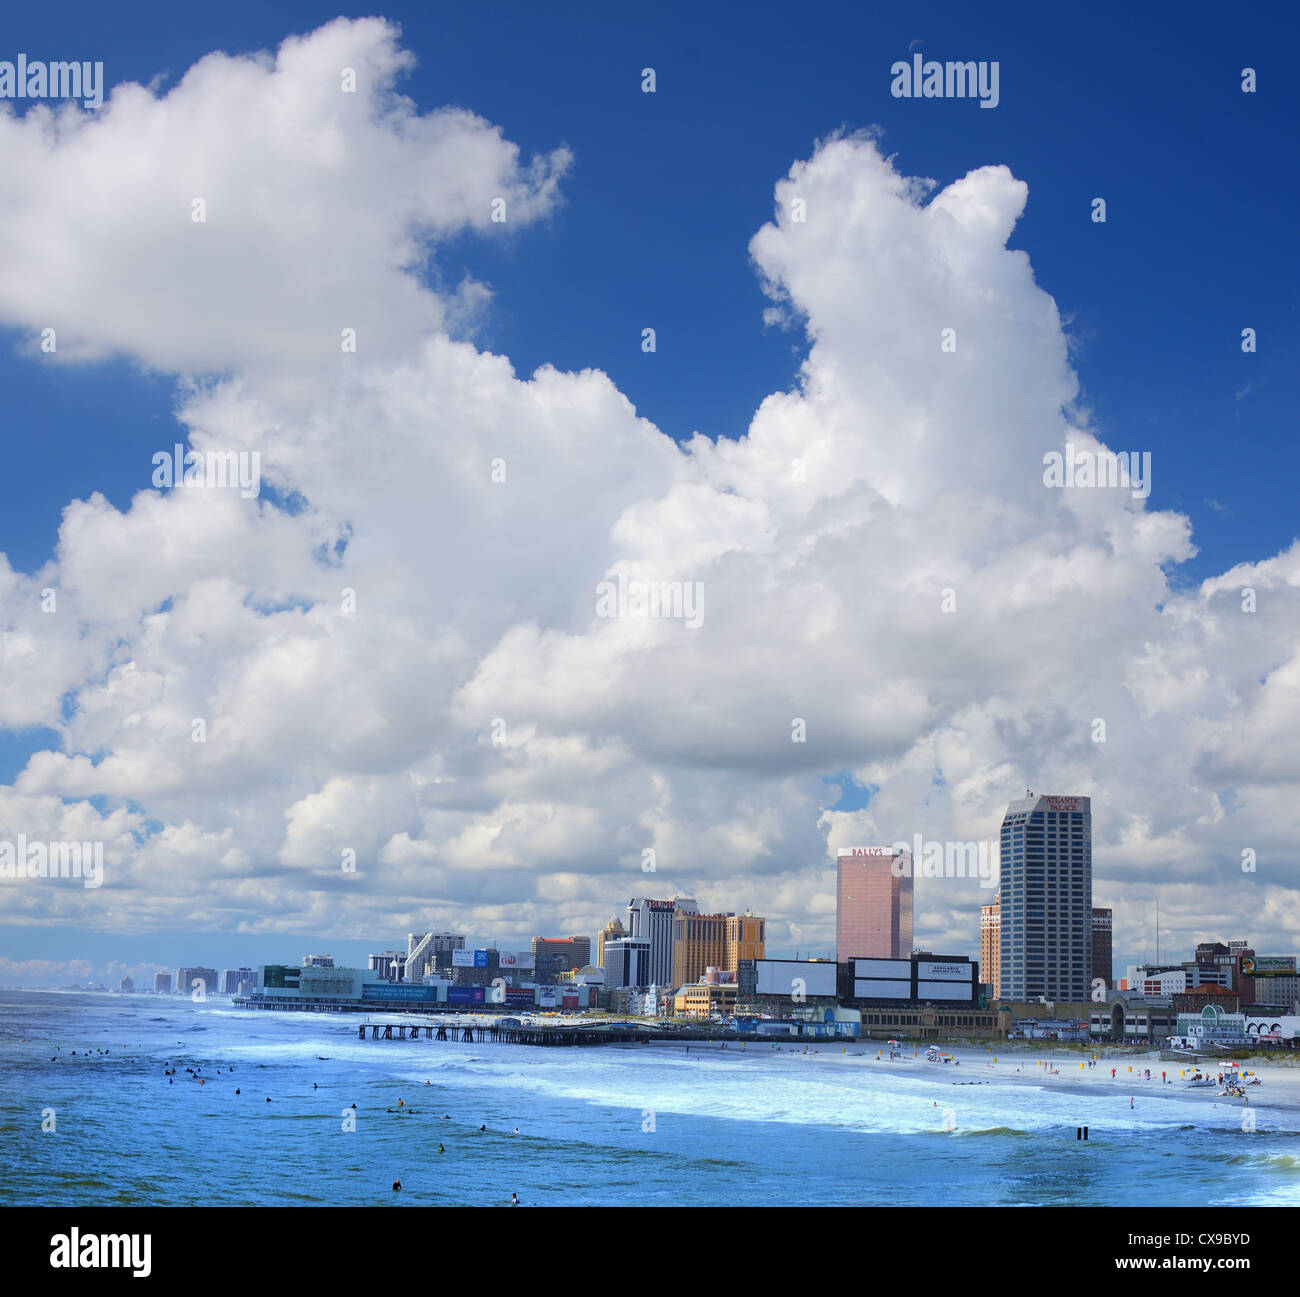 Casino resorts along the skyline of Atlantic City, New Jersey, USA. Stock Photo